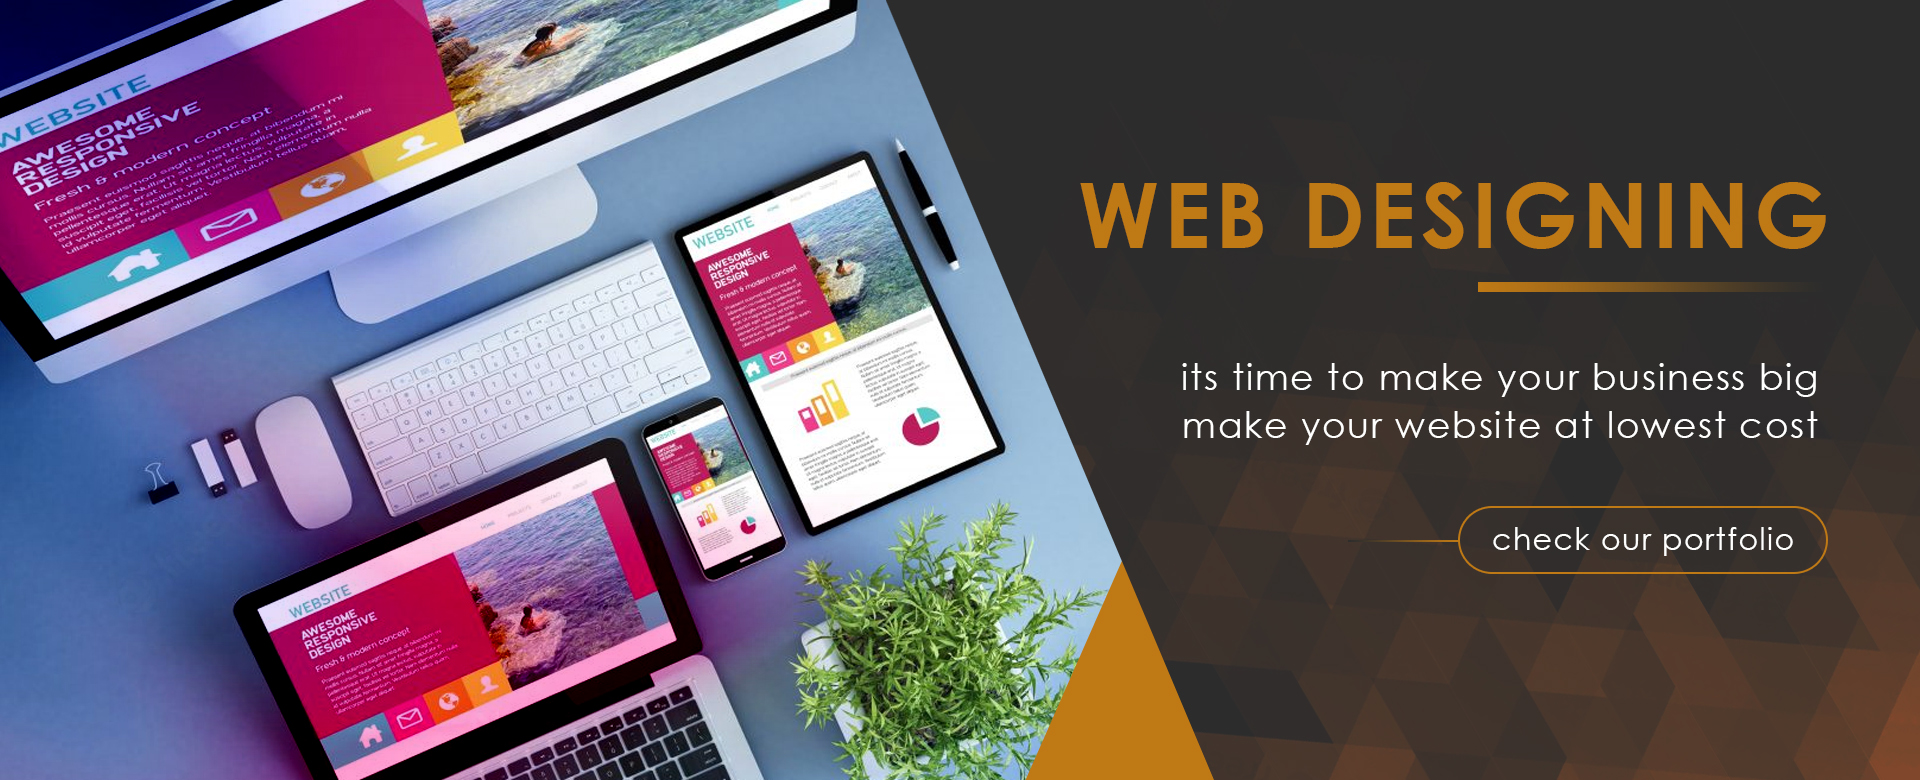 Website Designing & Develoment Company in Delhi, India| WebGodam